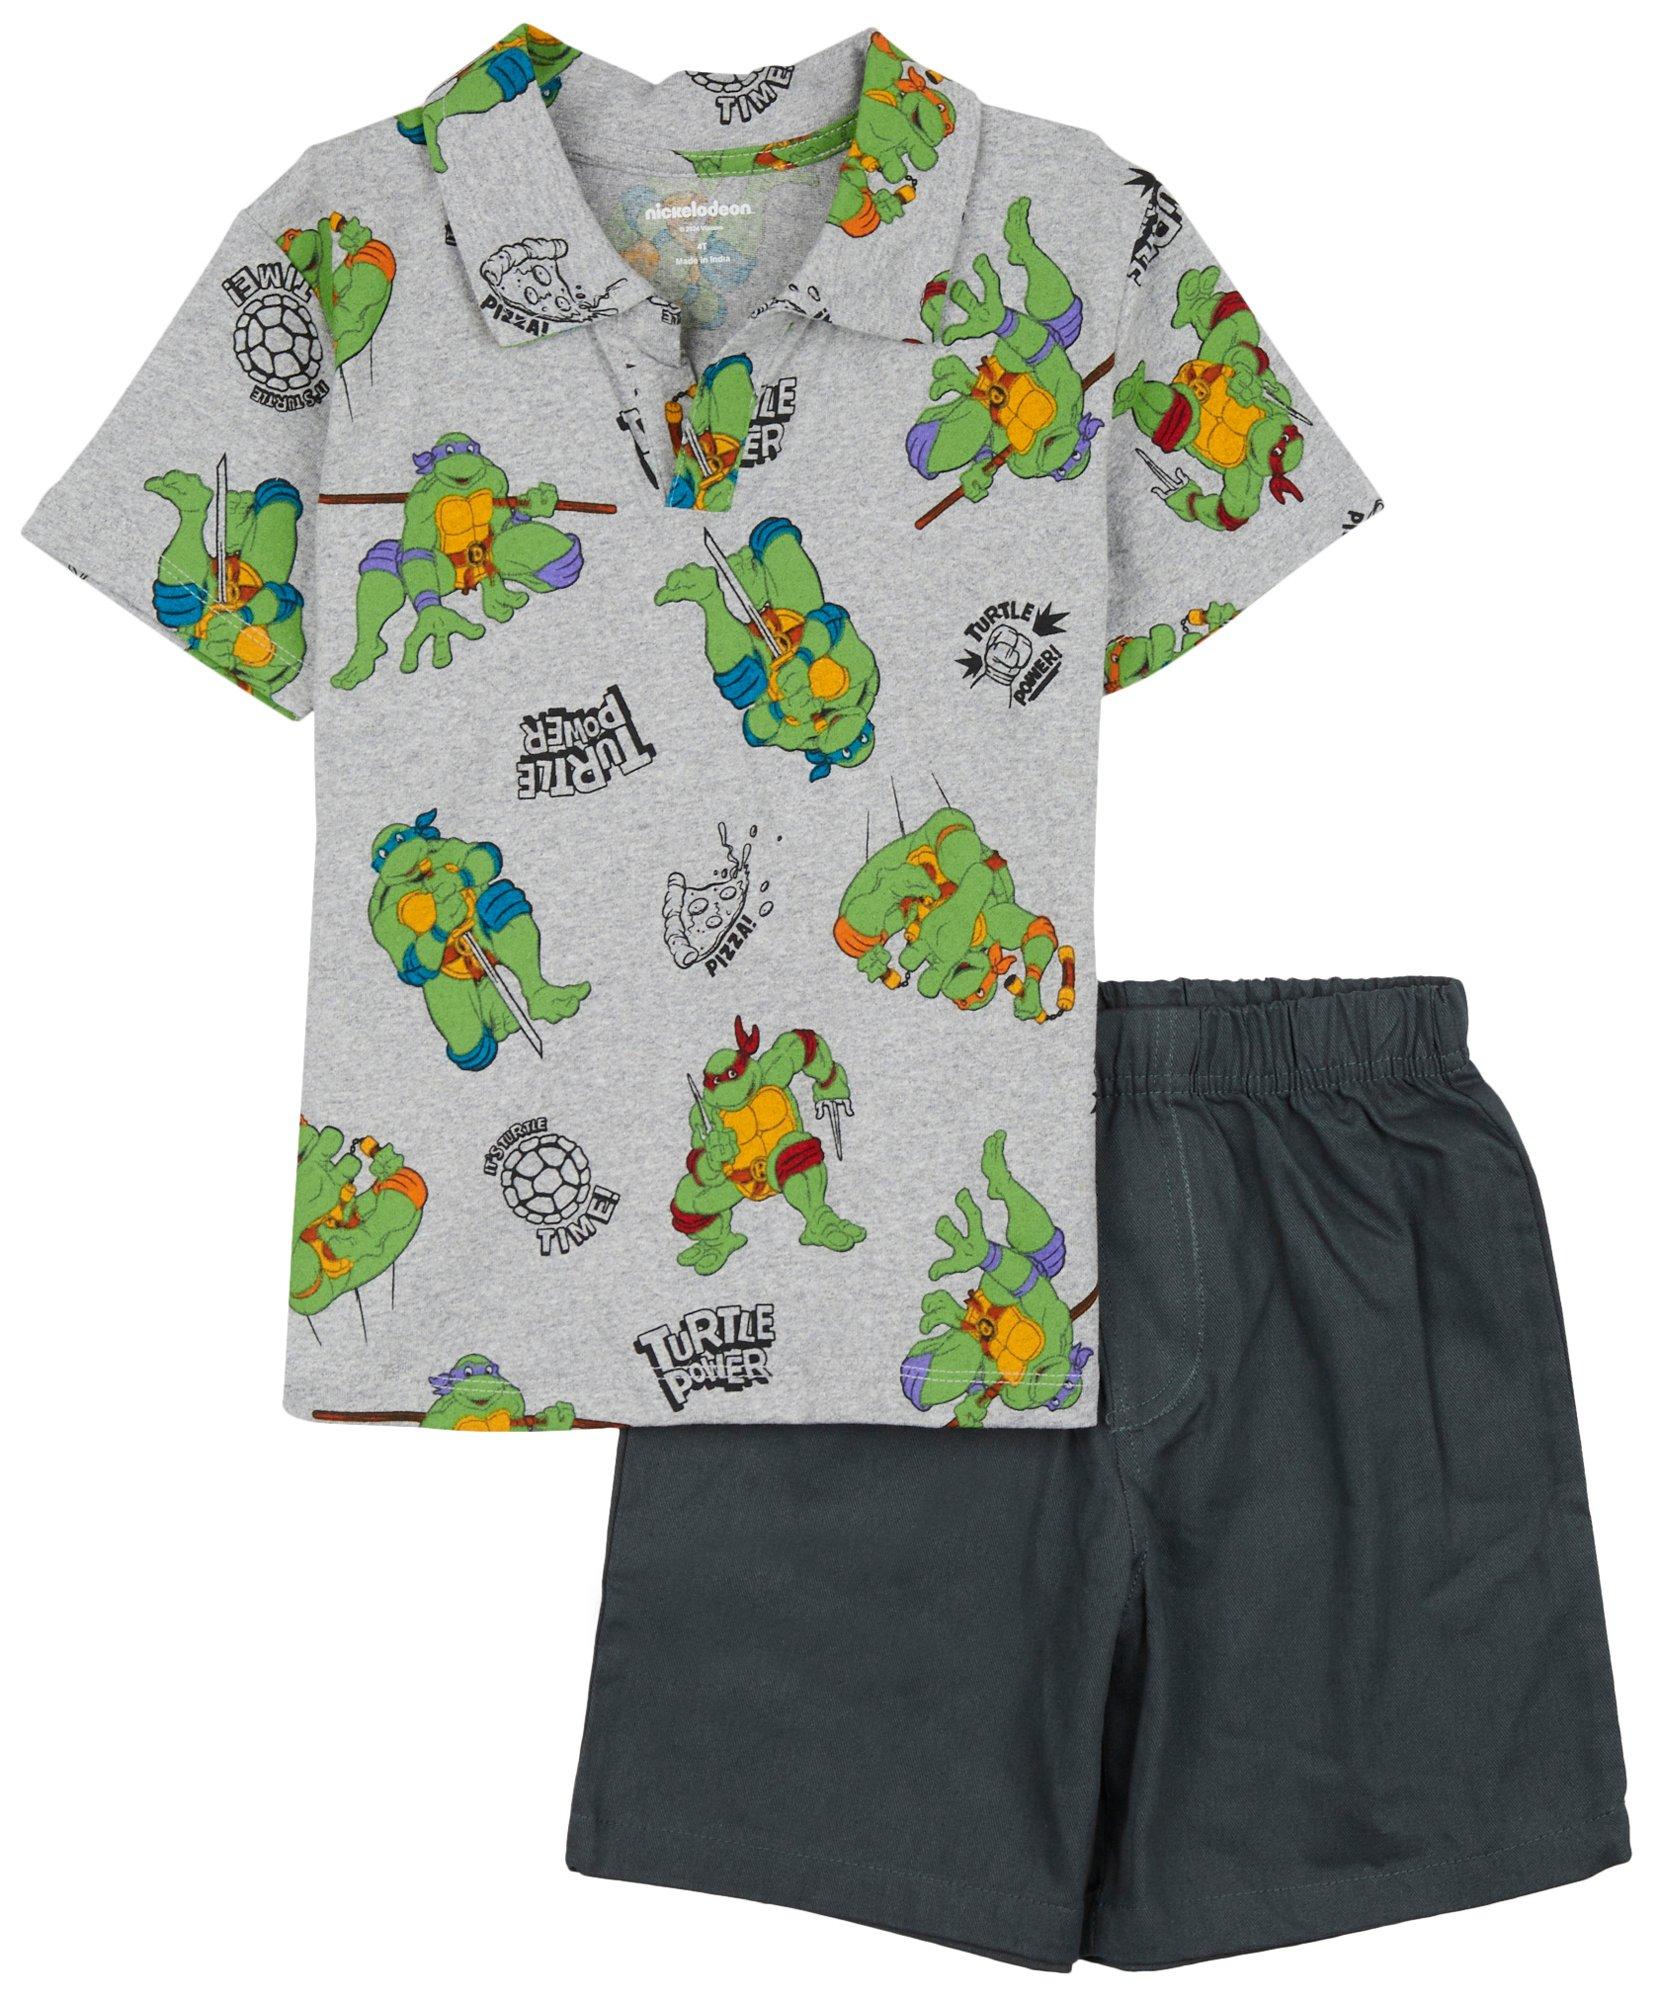 Nickelodeon 2pc. Toddler Boys Collar Knit T-Shirt Short